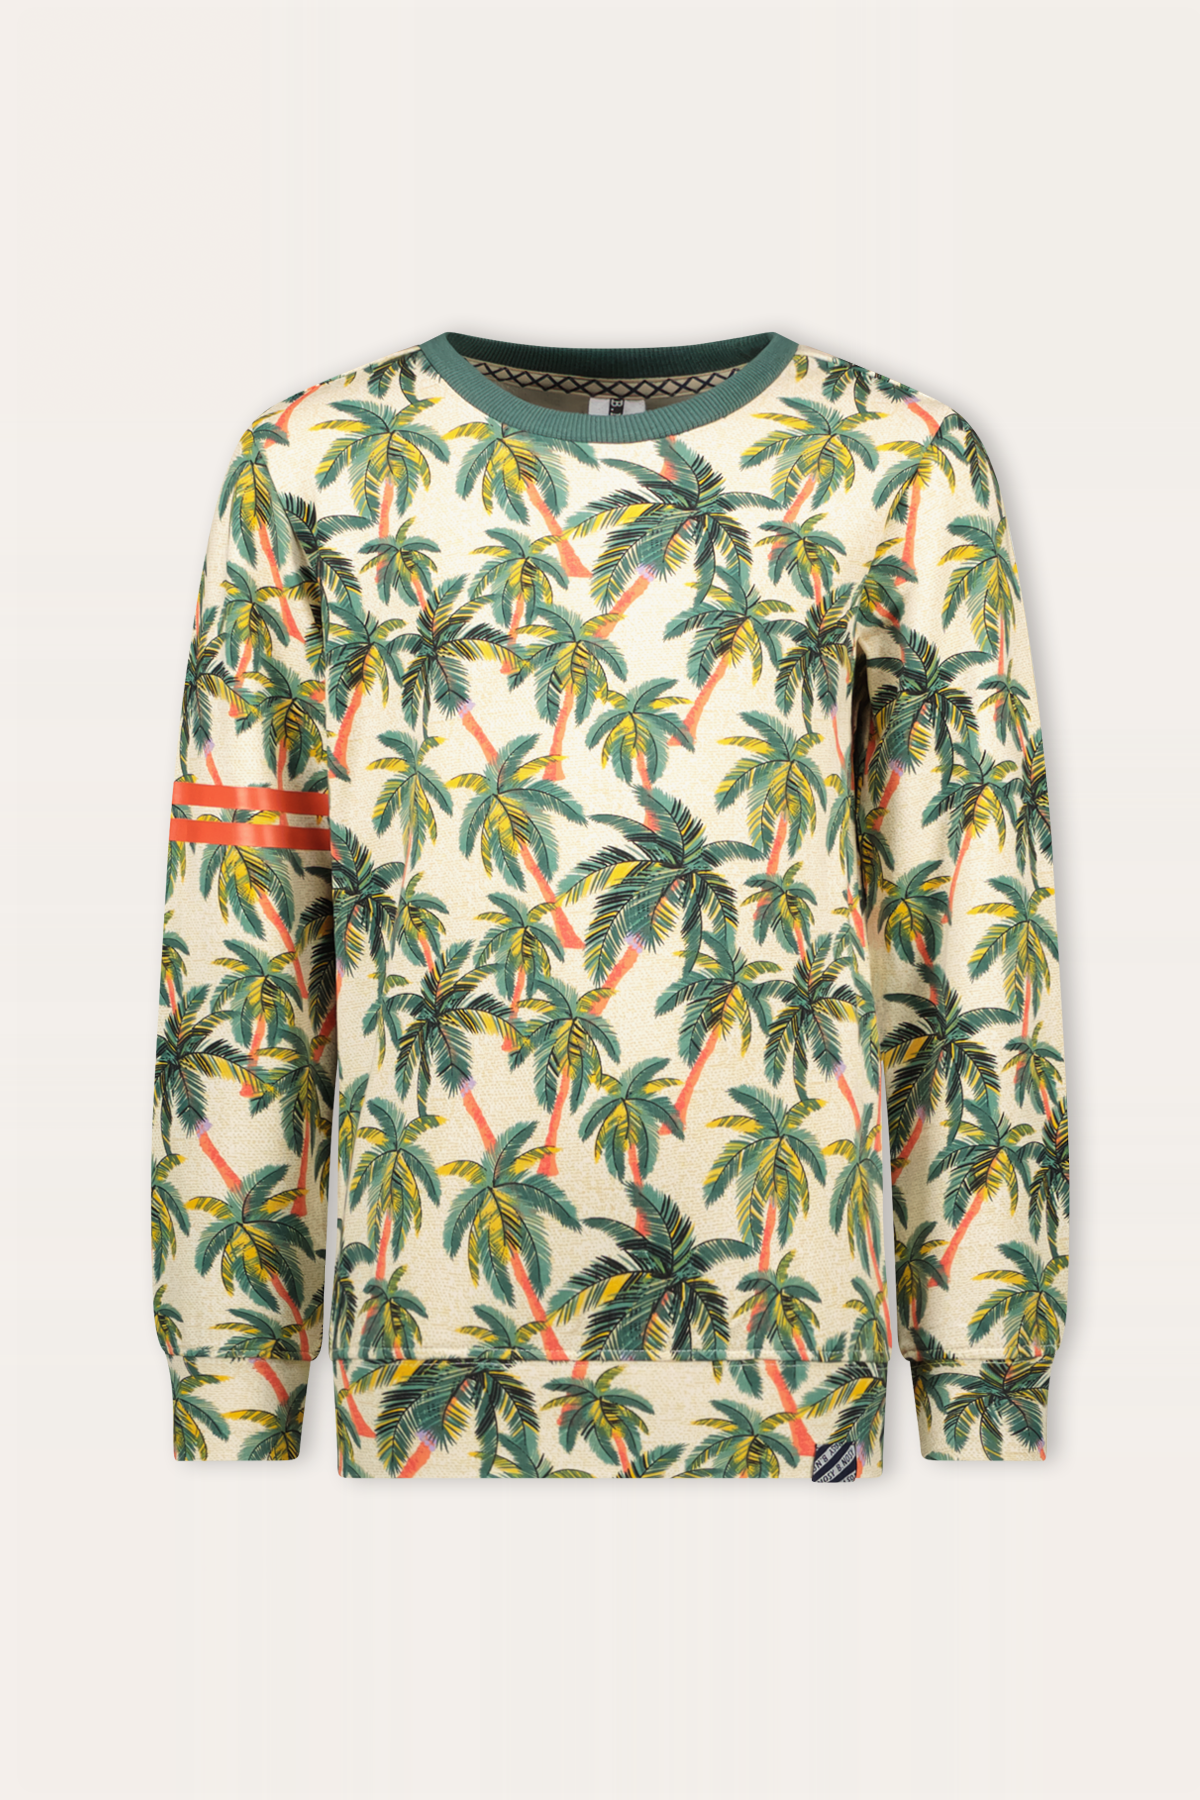 Image of KARL sweater palm